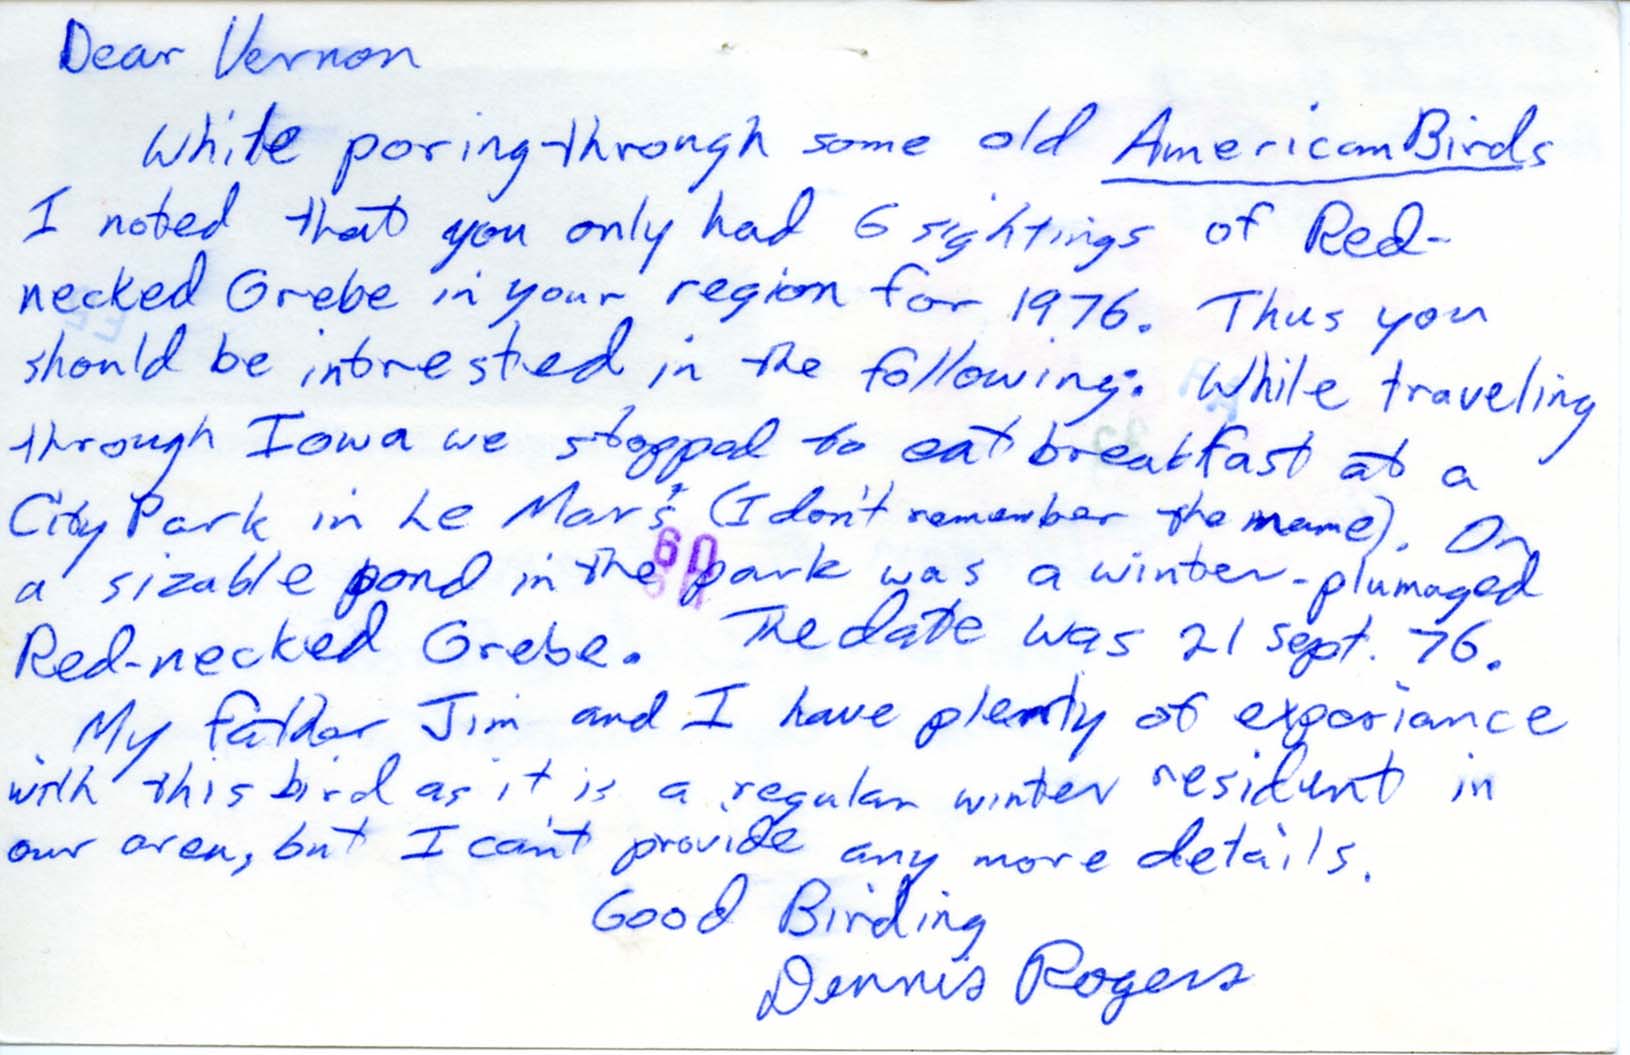 Dennis Rogers postcard to Vernon Kleen regarding a Red-Necked Grebe sighting, November 26, 1979